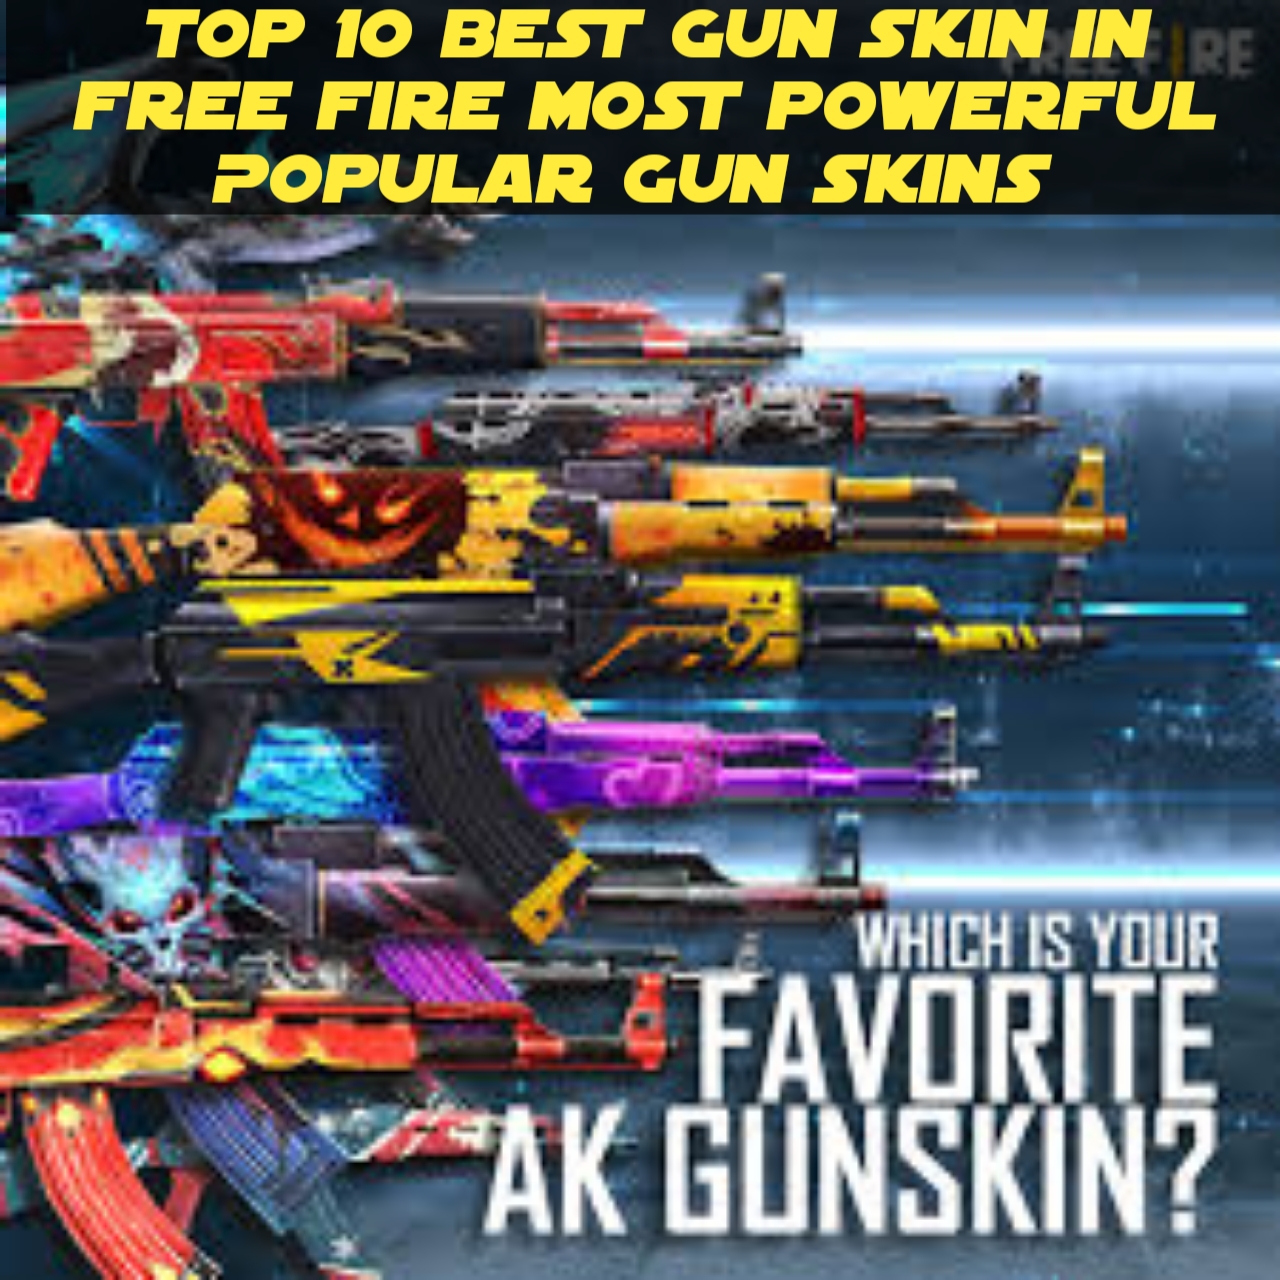 Top 10 Best Gun Skin In Free Fire Most powerful Popular Gun Skins